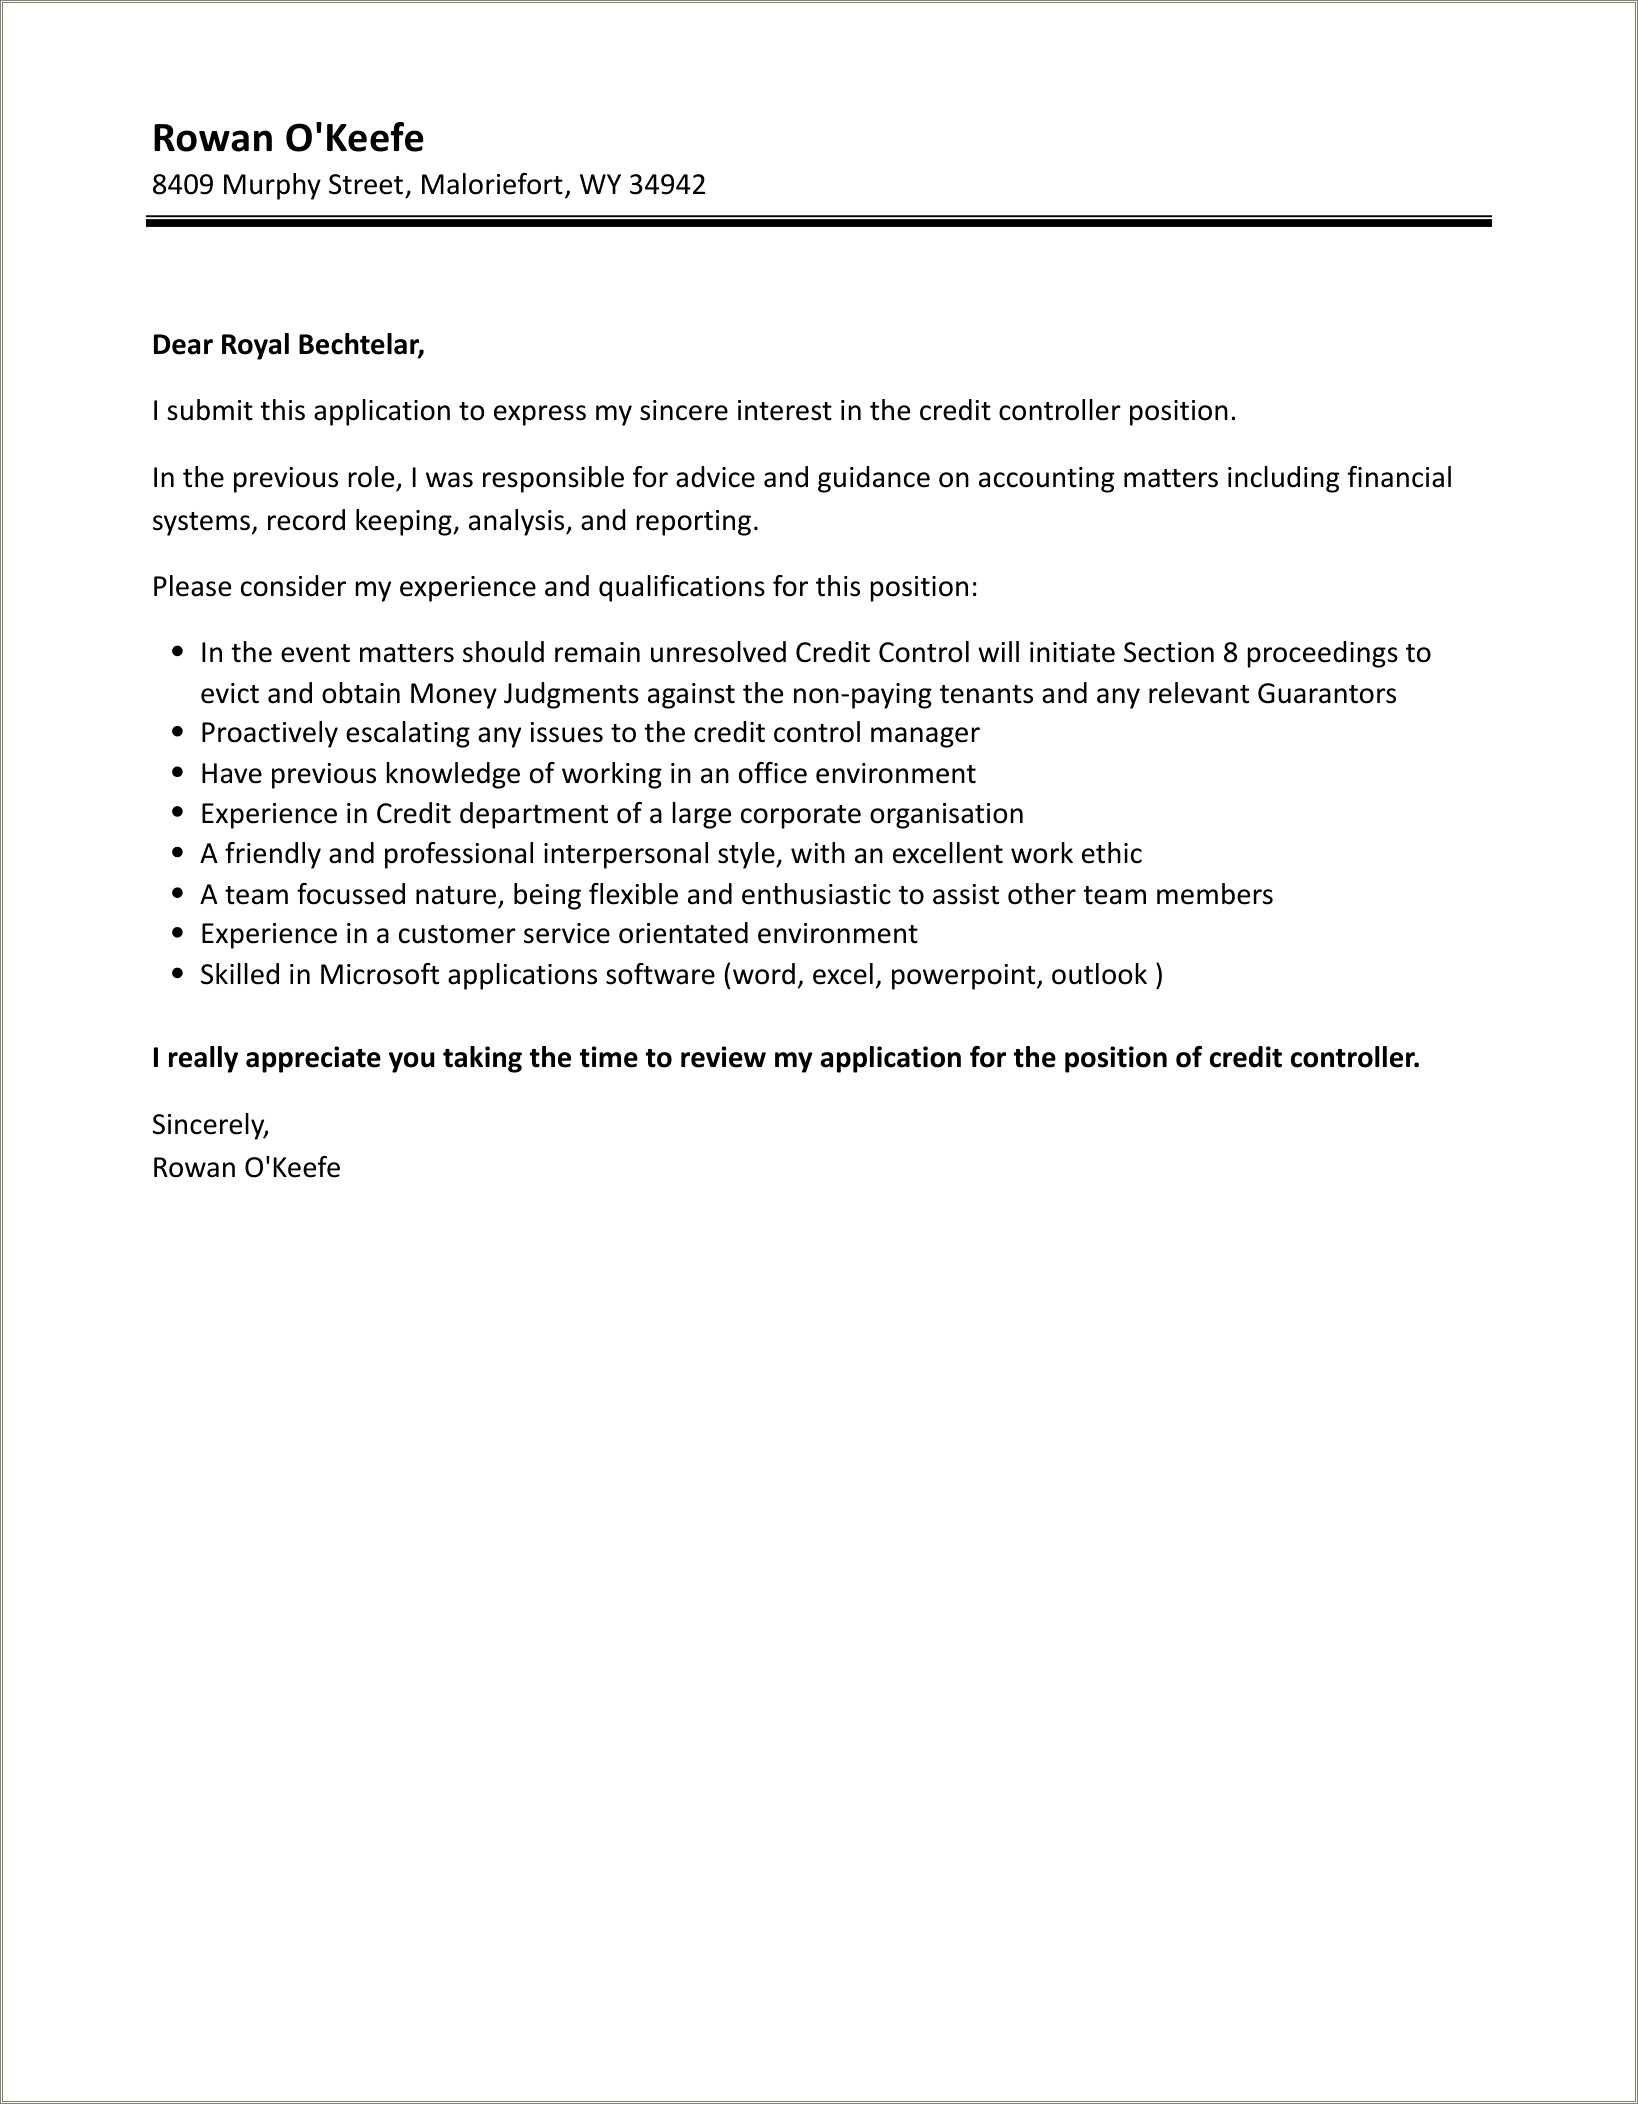 Sample Resume Cover Letter For Controller